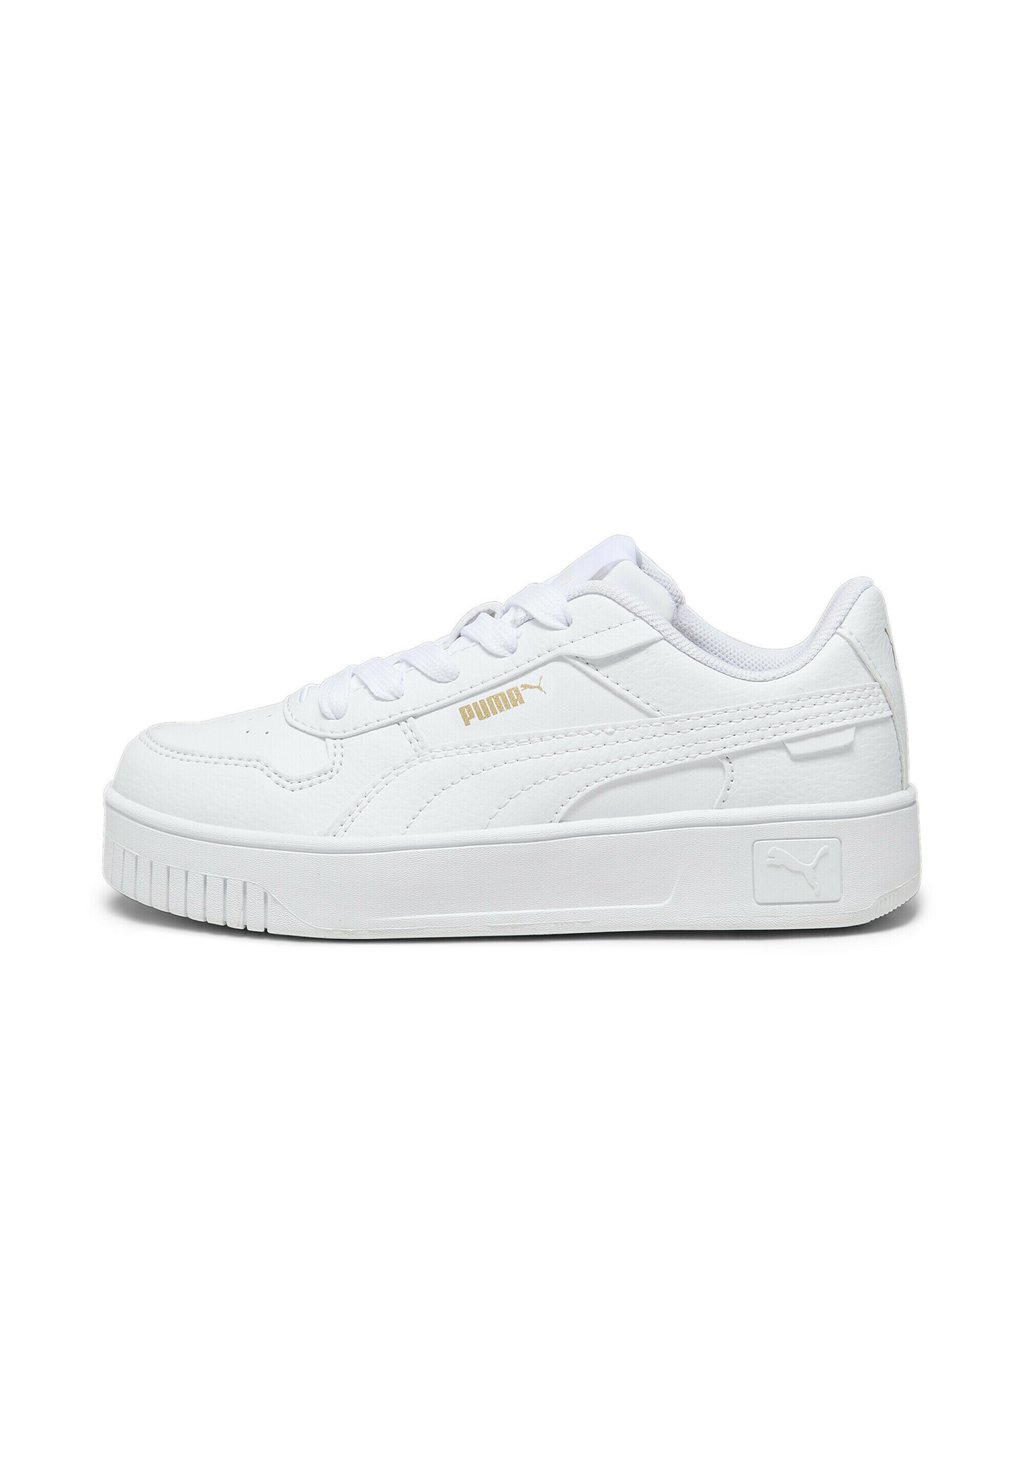 Кроссовки низкие CARINA STREET PS Puma, цвет white white gold